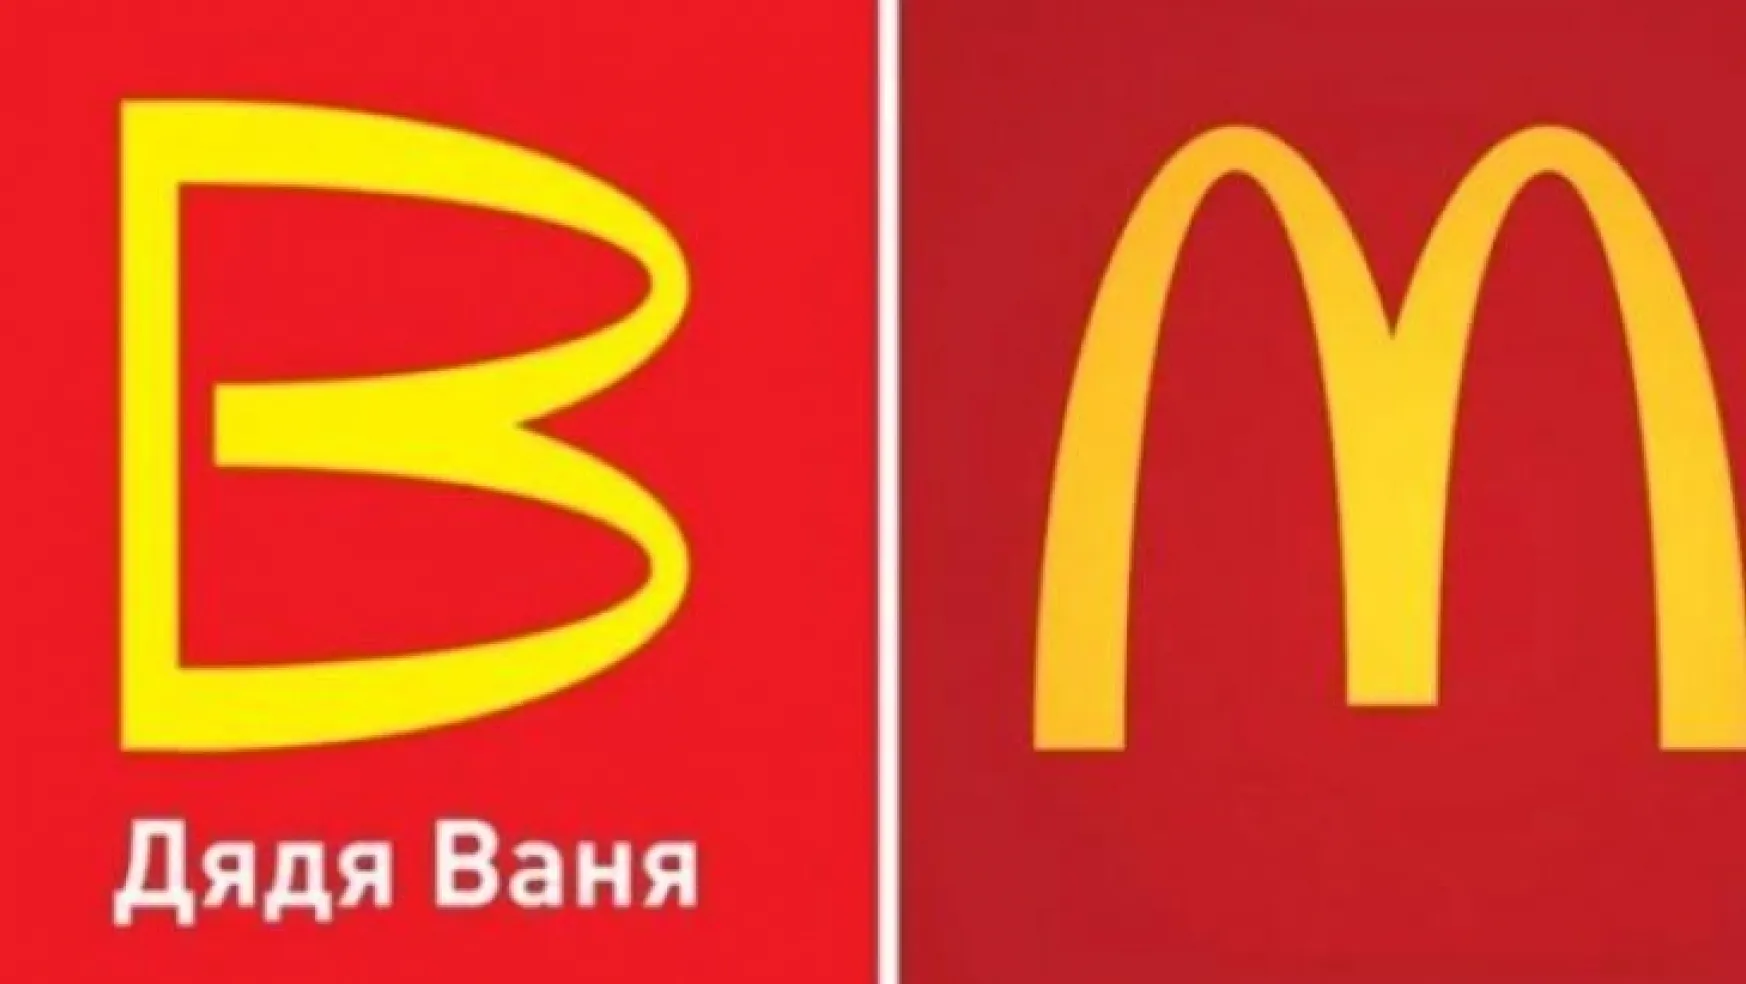 Rusya'nın yeni McDonald's'ı: Vanya Dayı